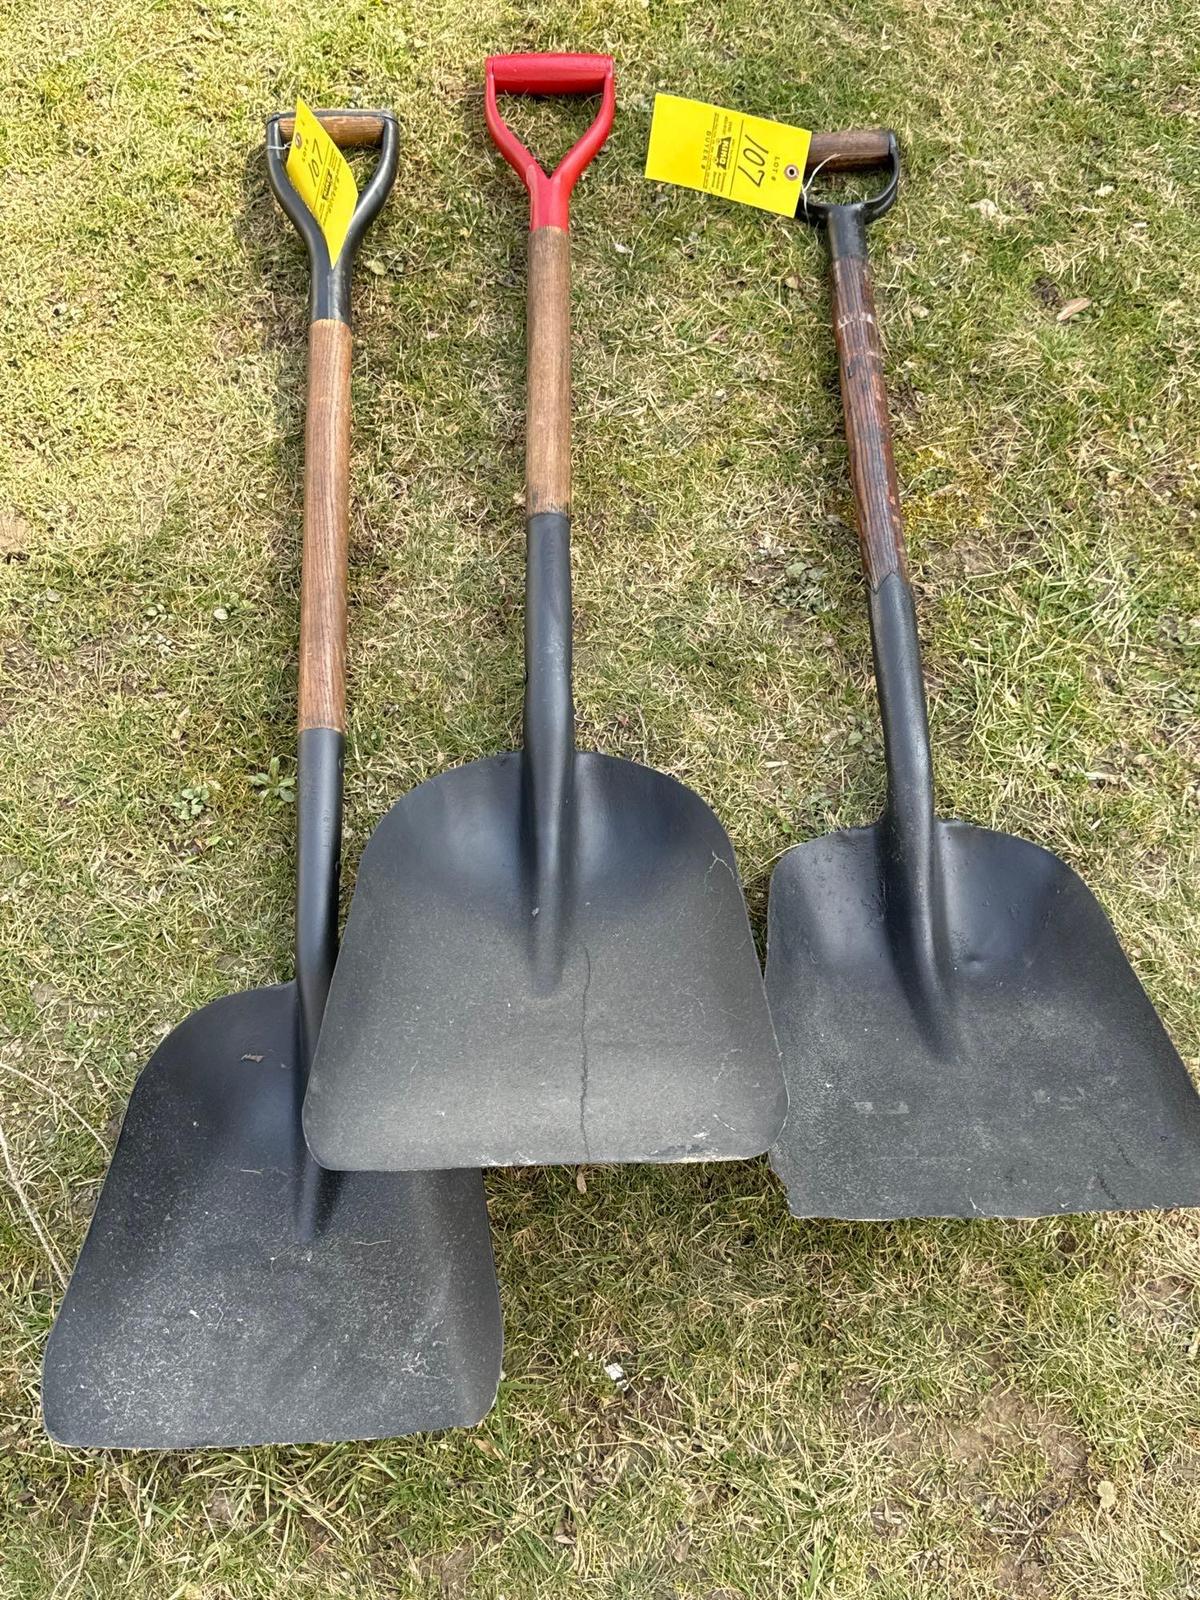 RR shovels, PRR, B & O, L & N RR